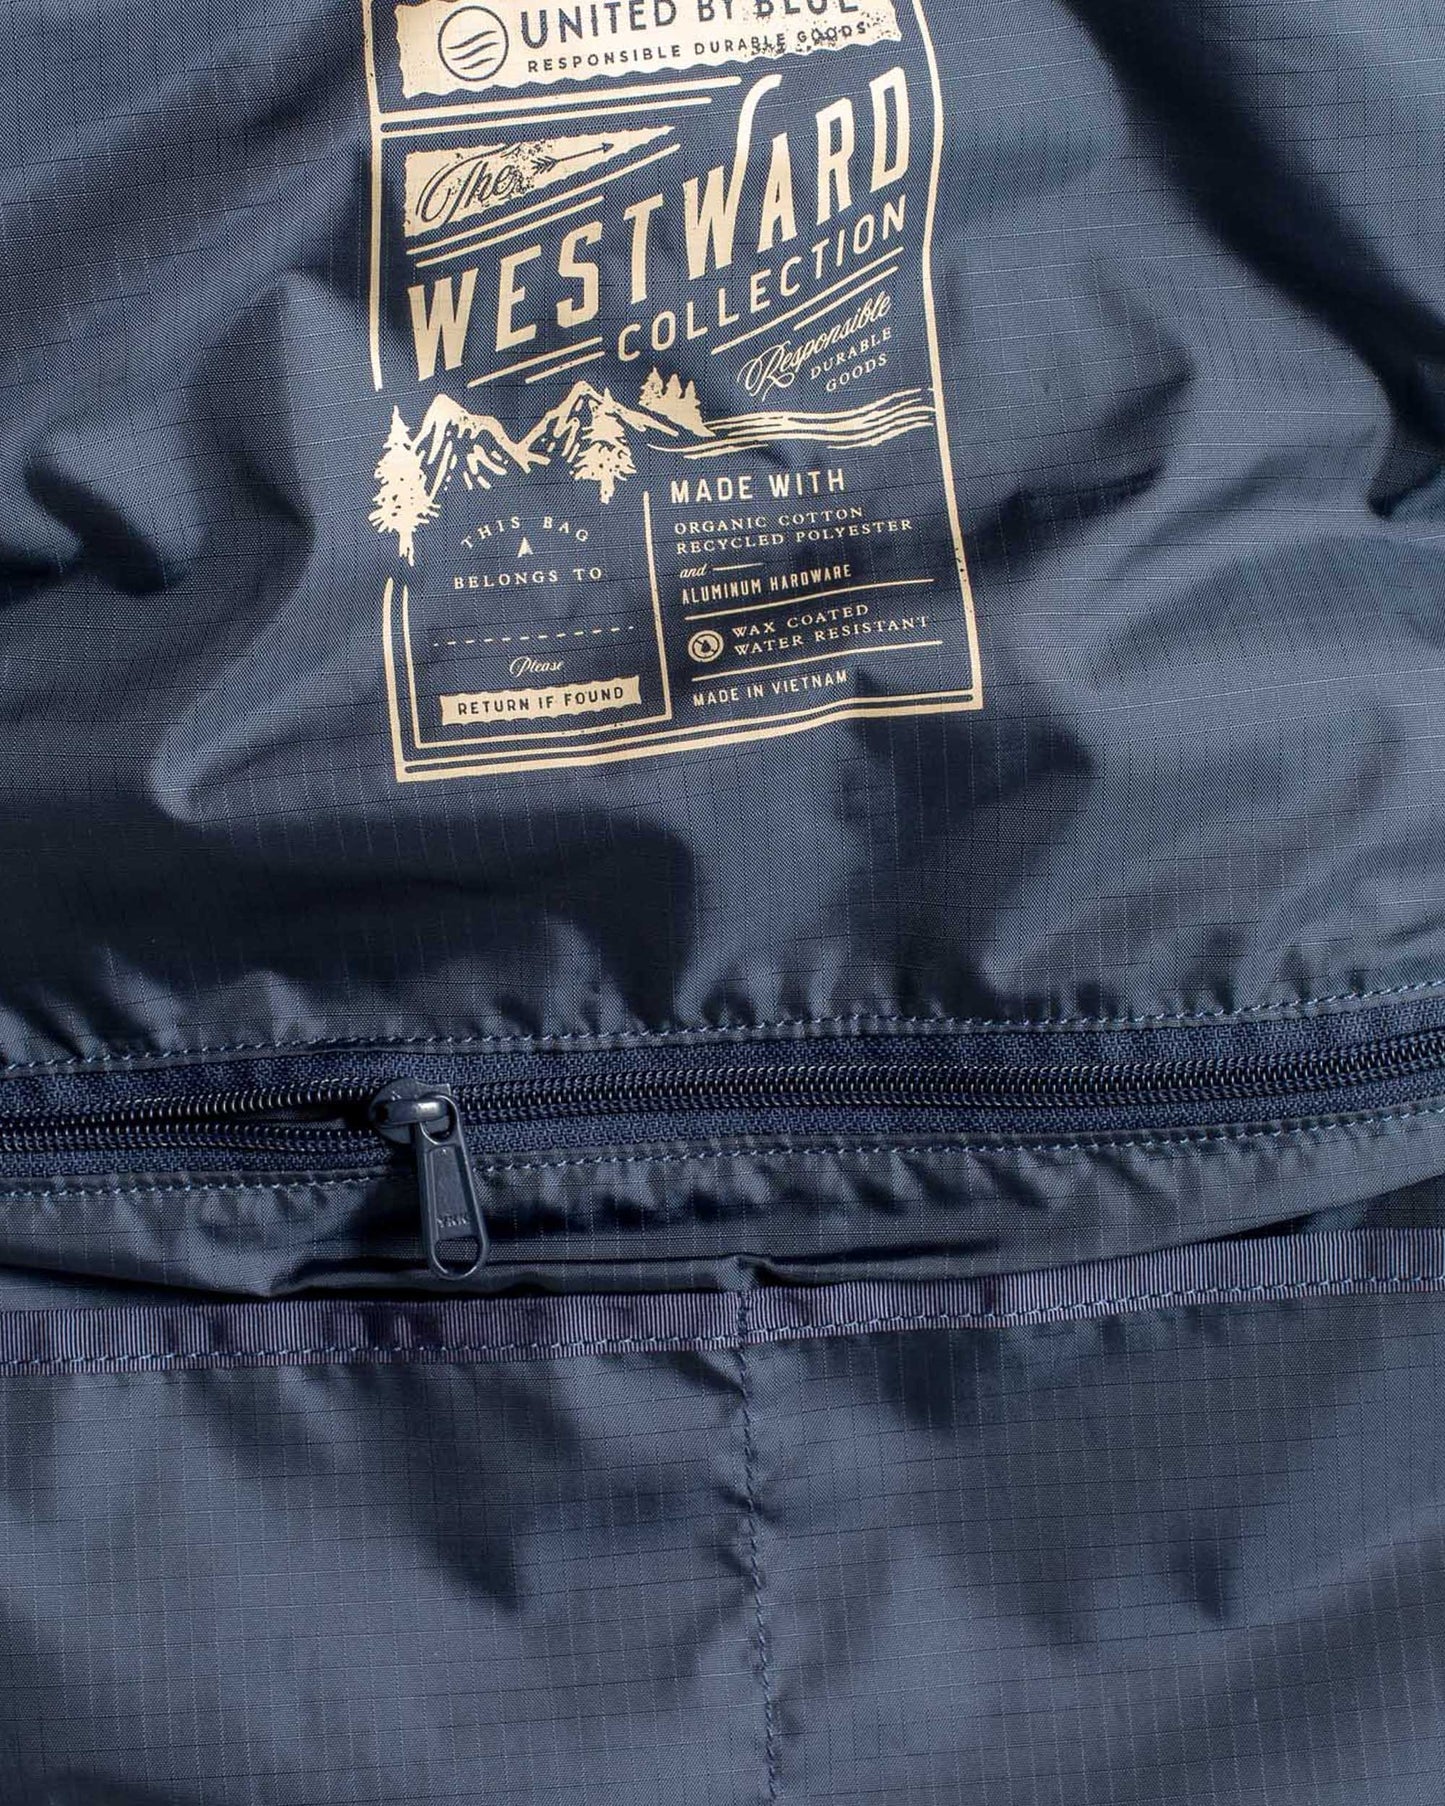 Westward 23L Rolltop Backpack